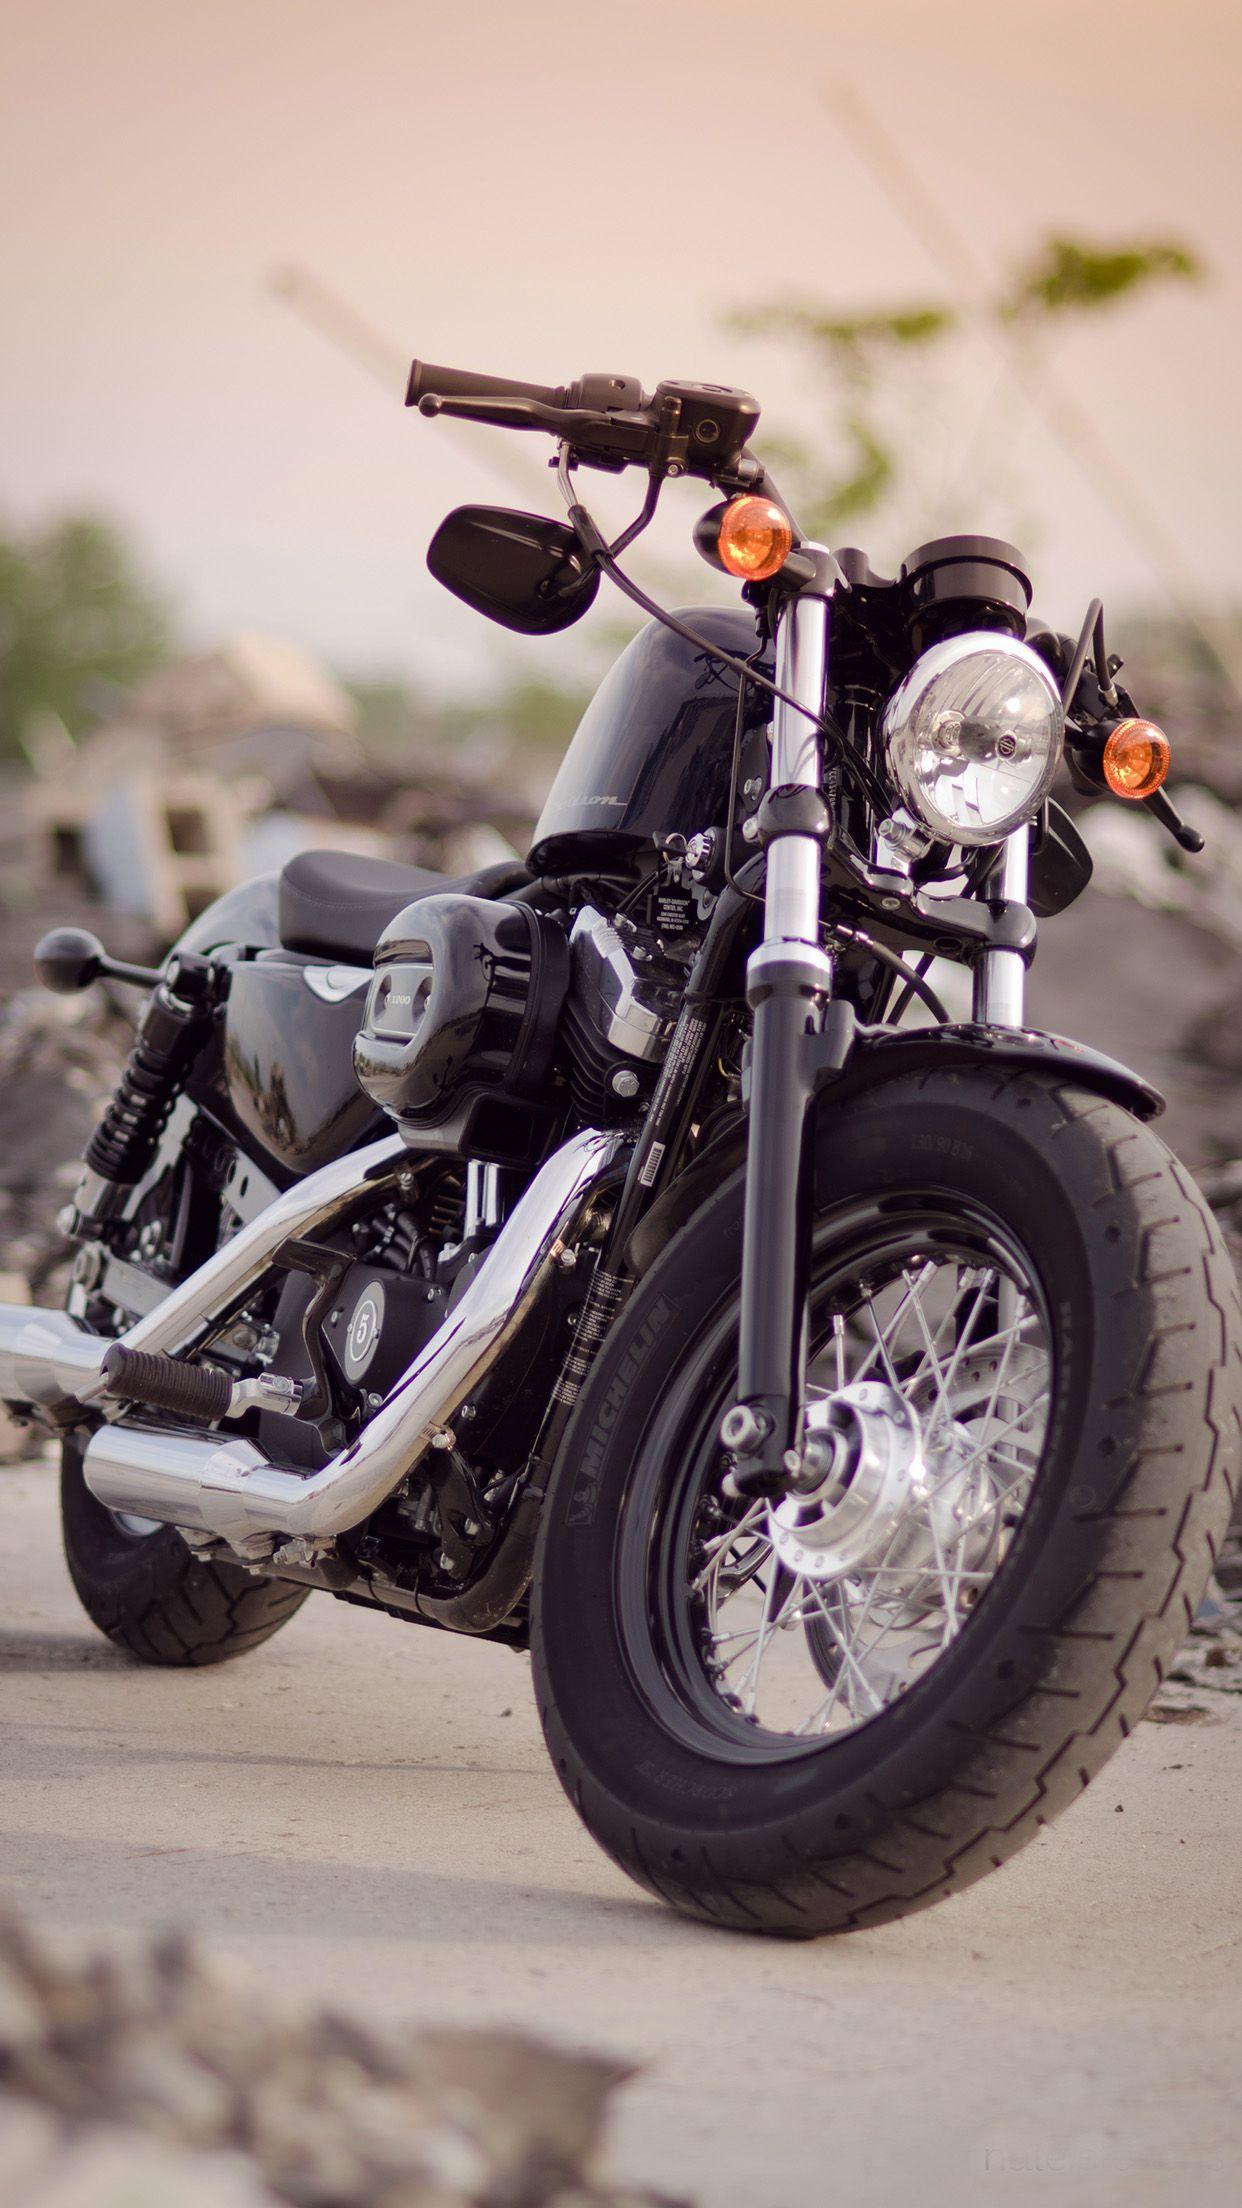 Iphone Harley Davidson Motorcycle Wallpaper